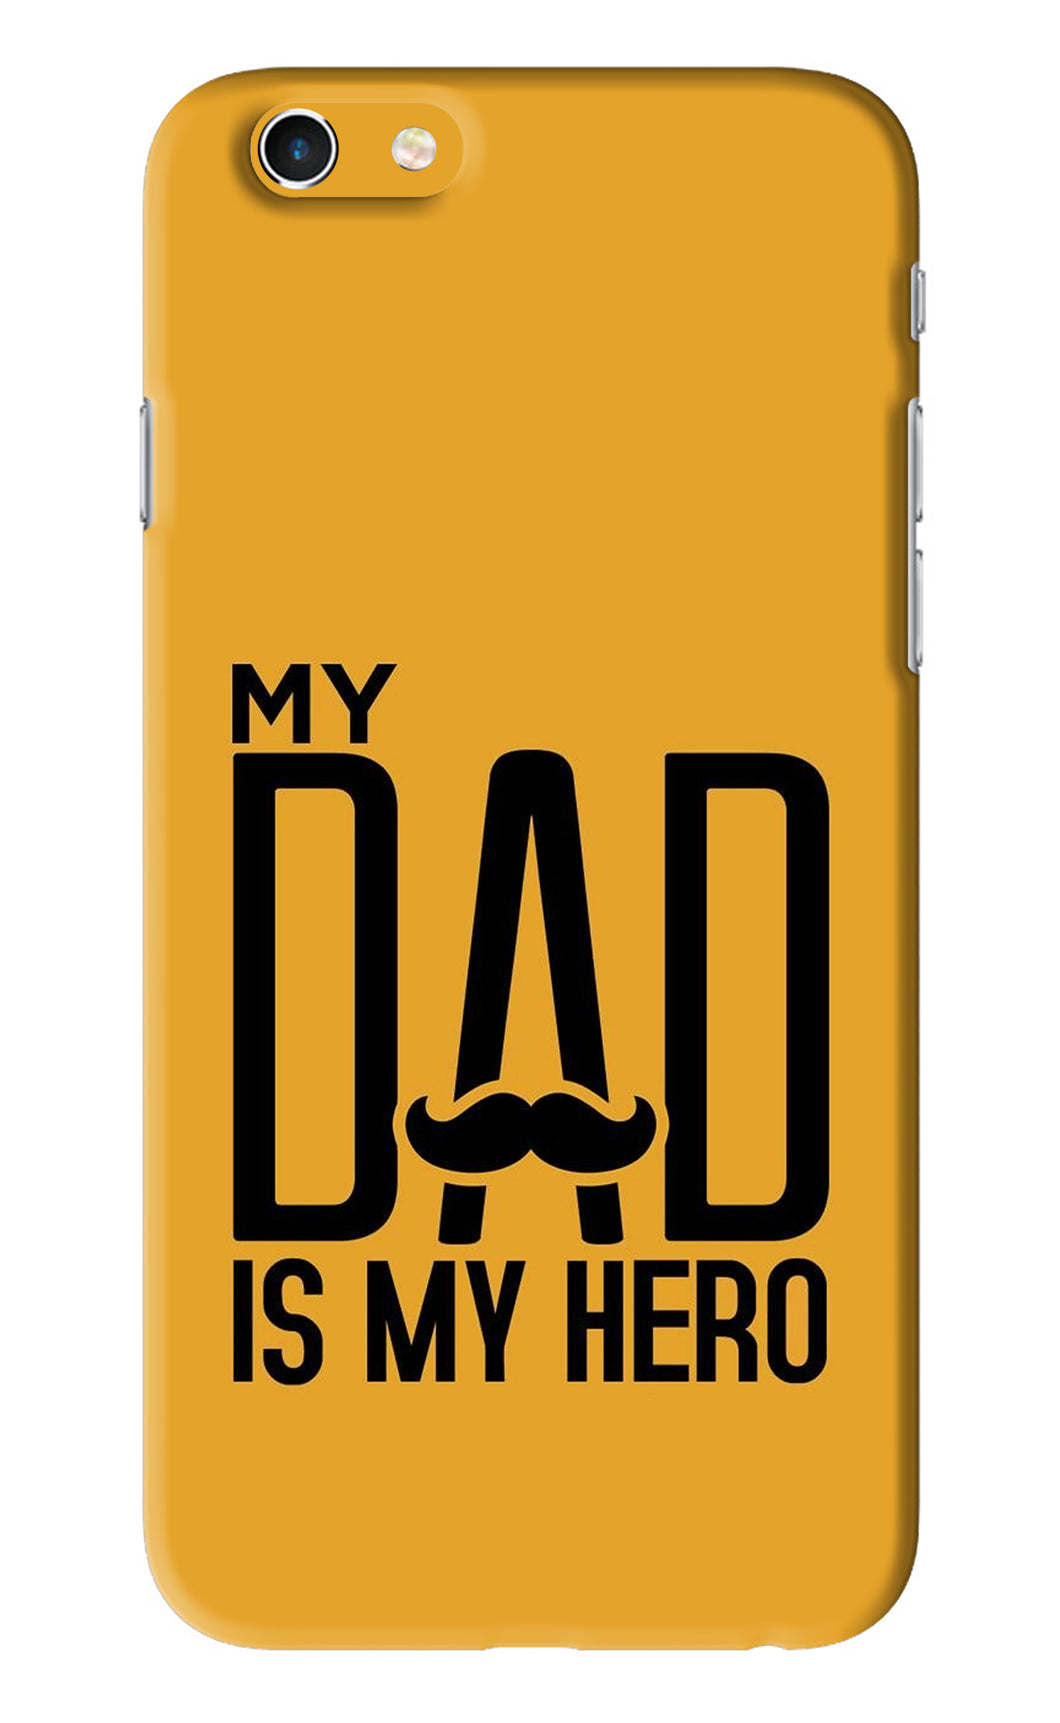 My Dad Is My Hero iPhone 6 Back Skin Wrap